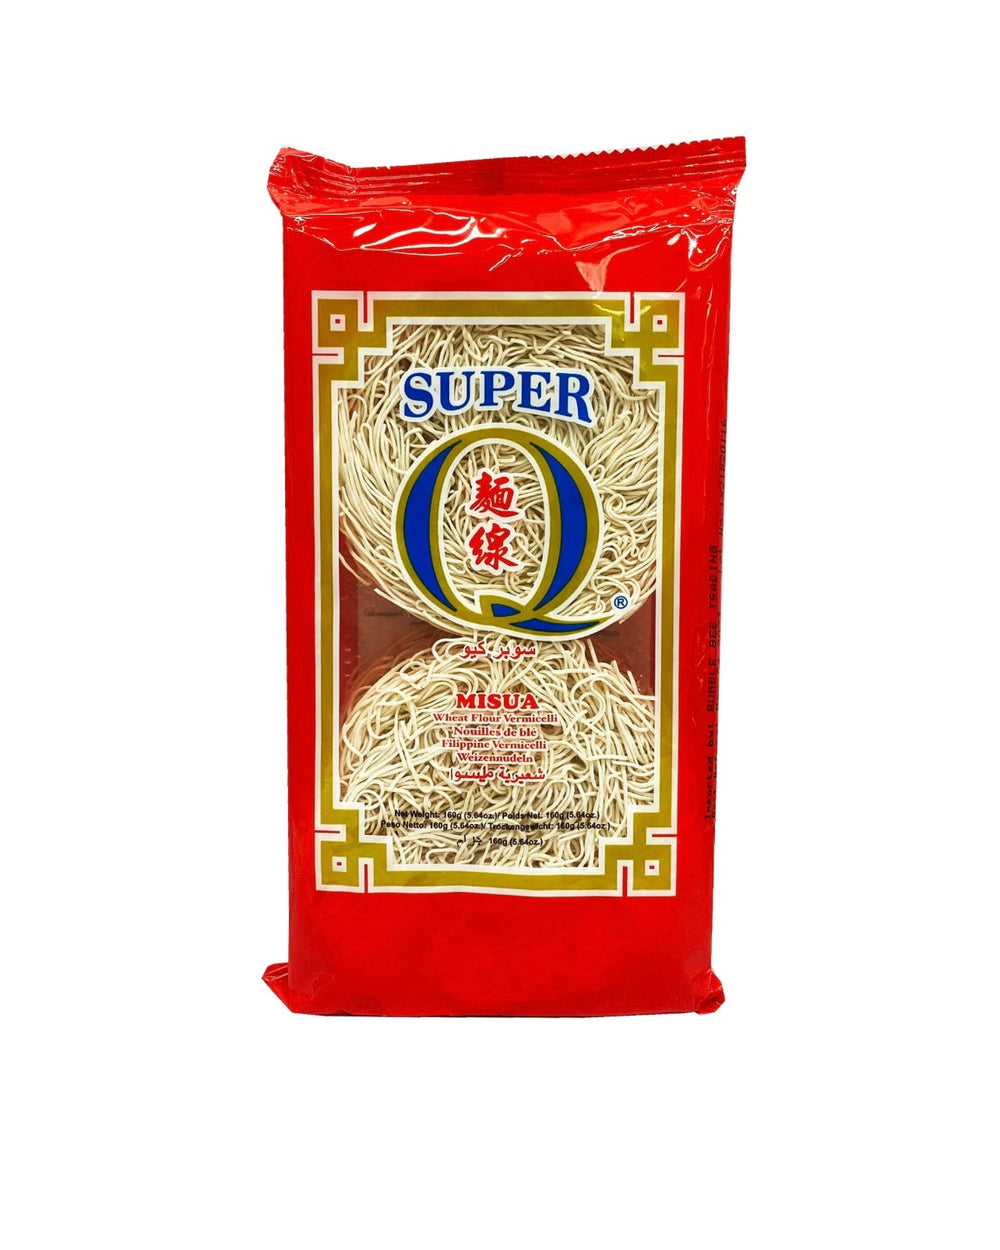 Super Q Misua - Wheat Flour Vermicelli